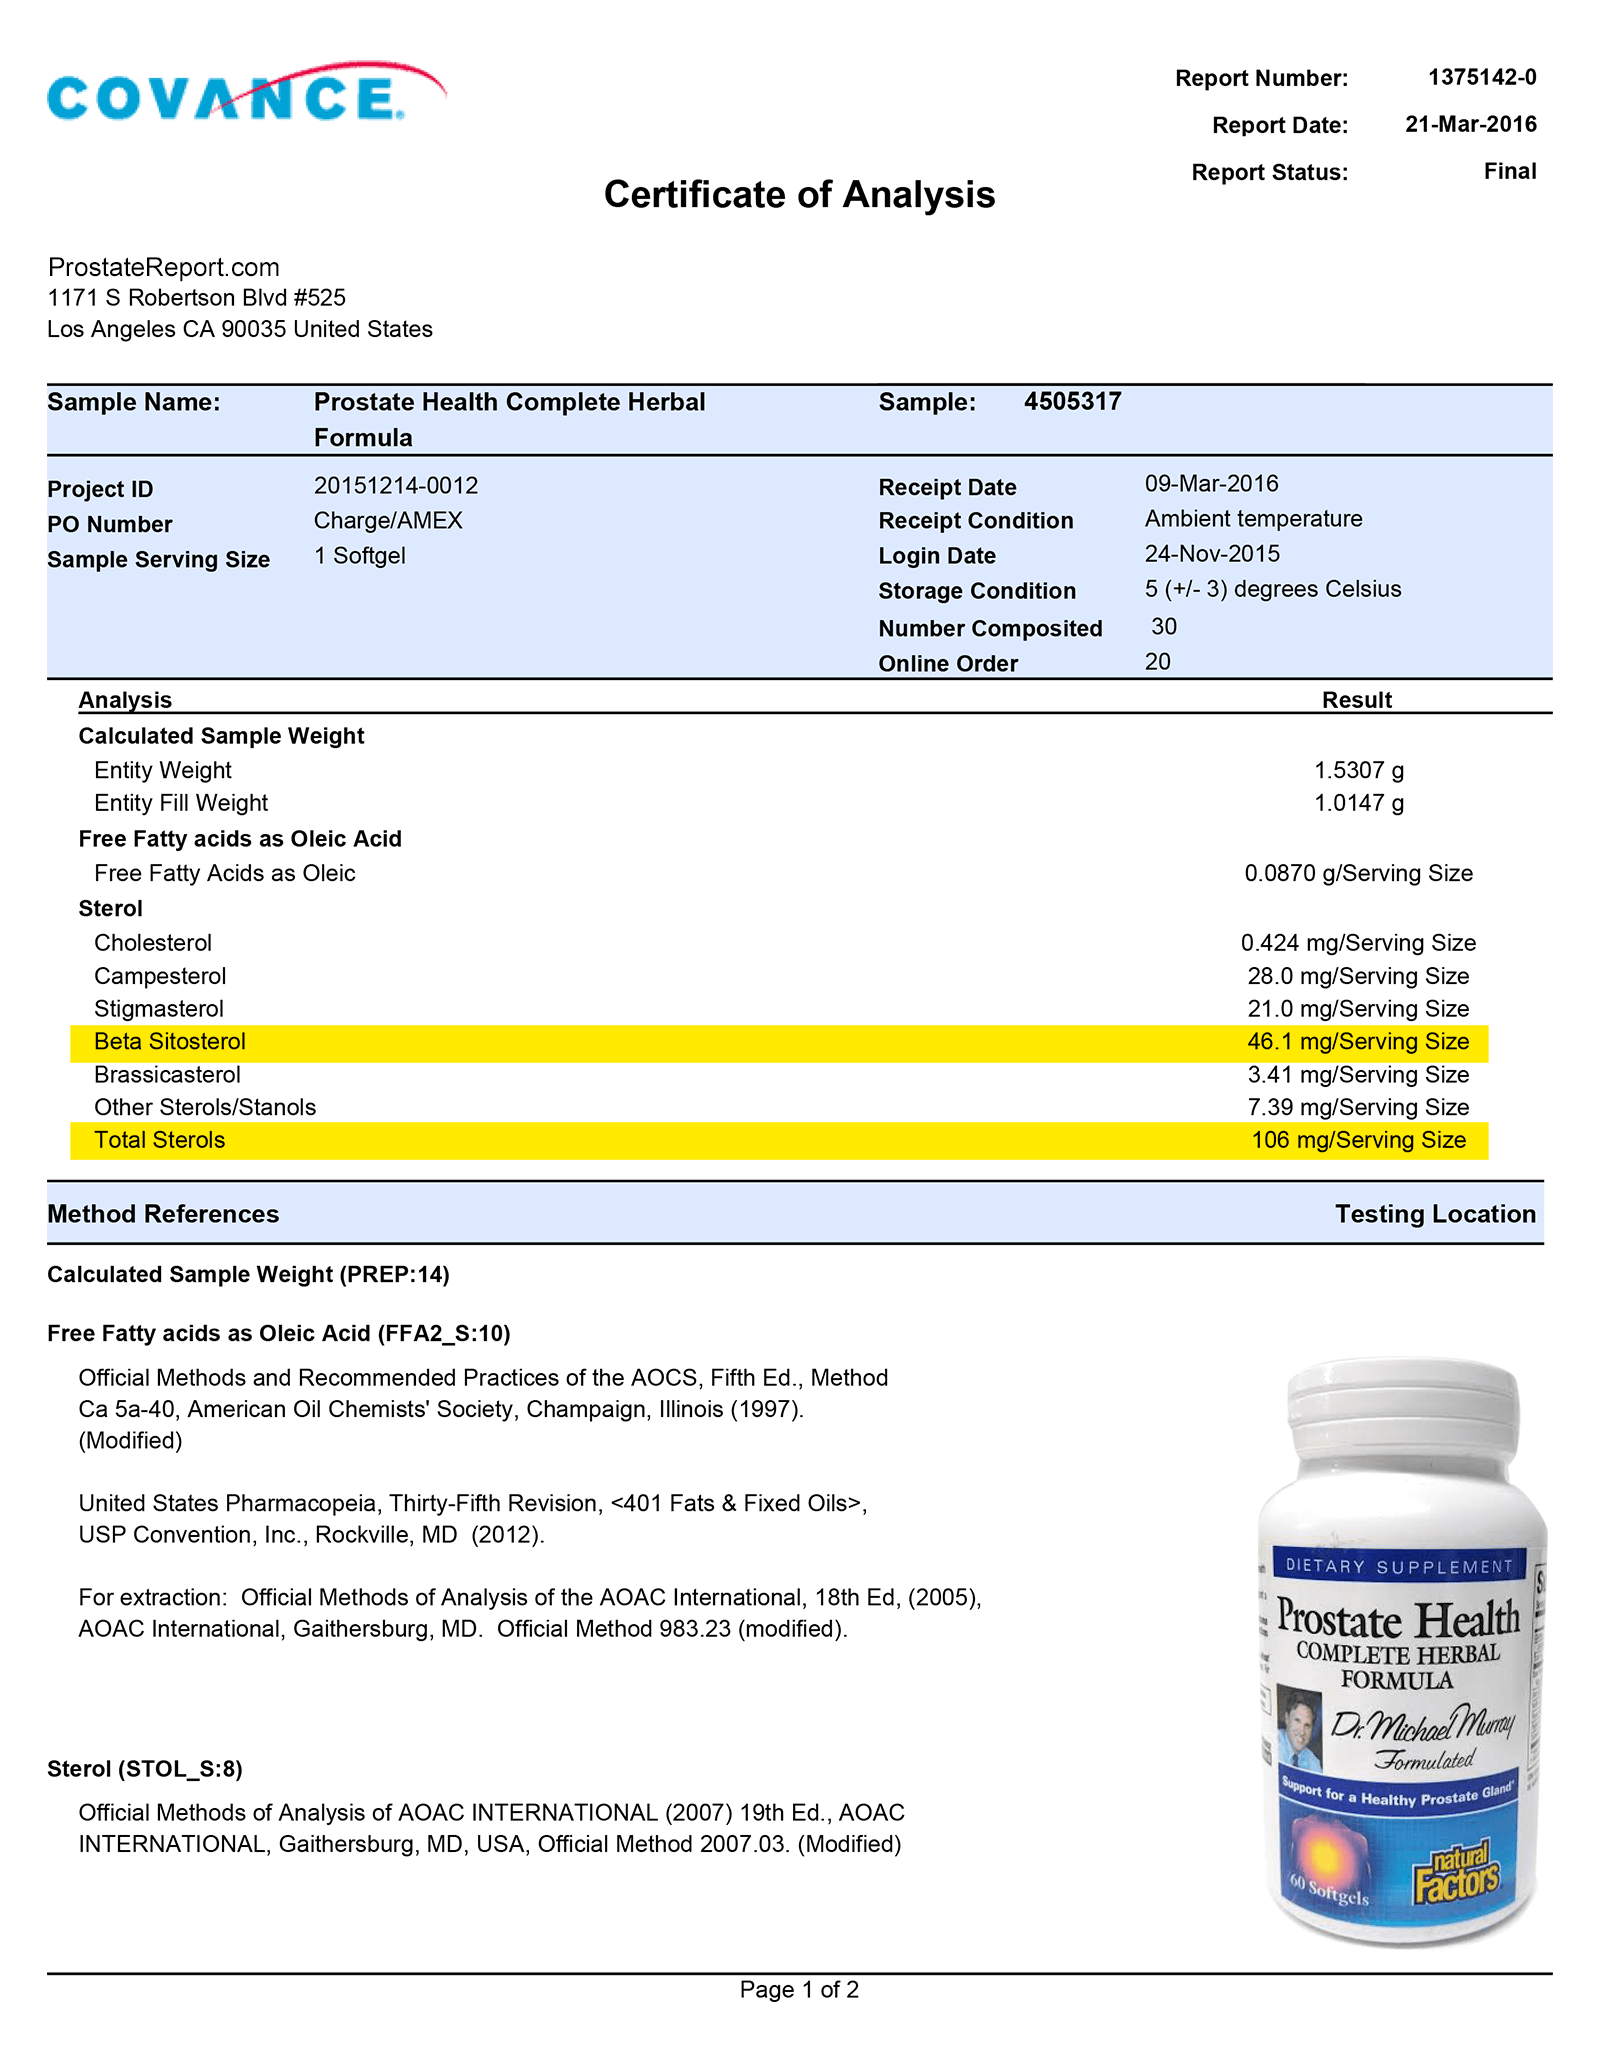 Prostate Health Complete Herbal Formula lab report 